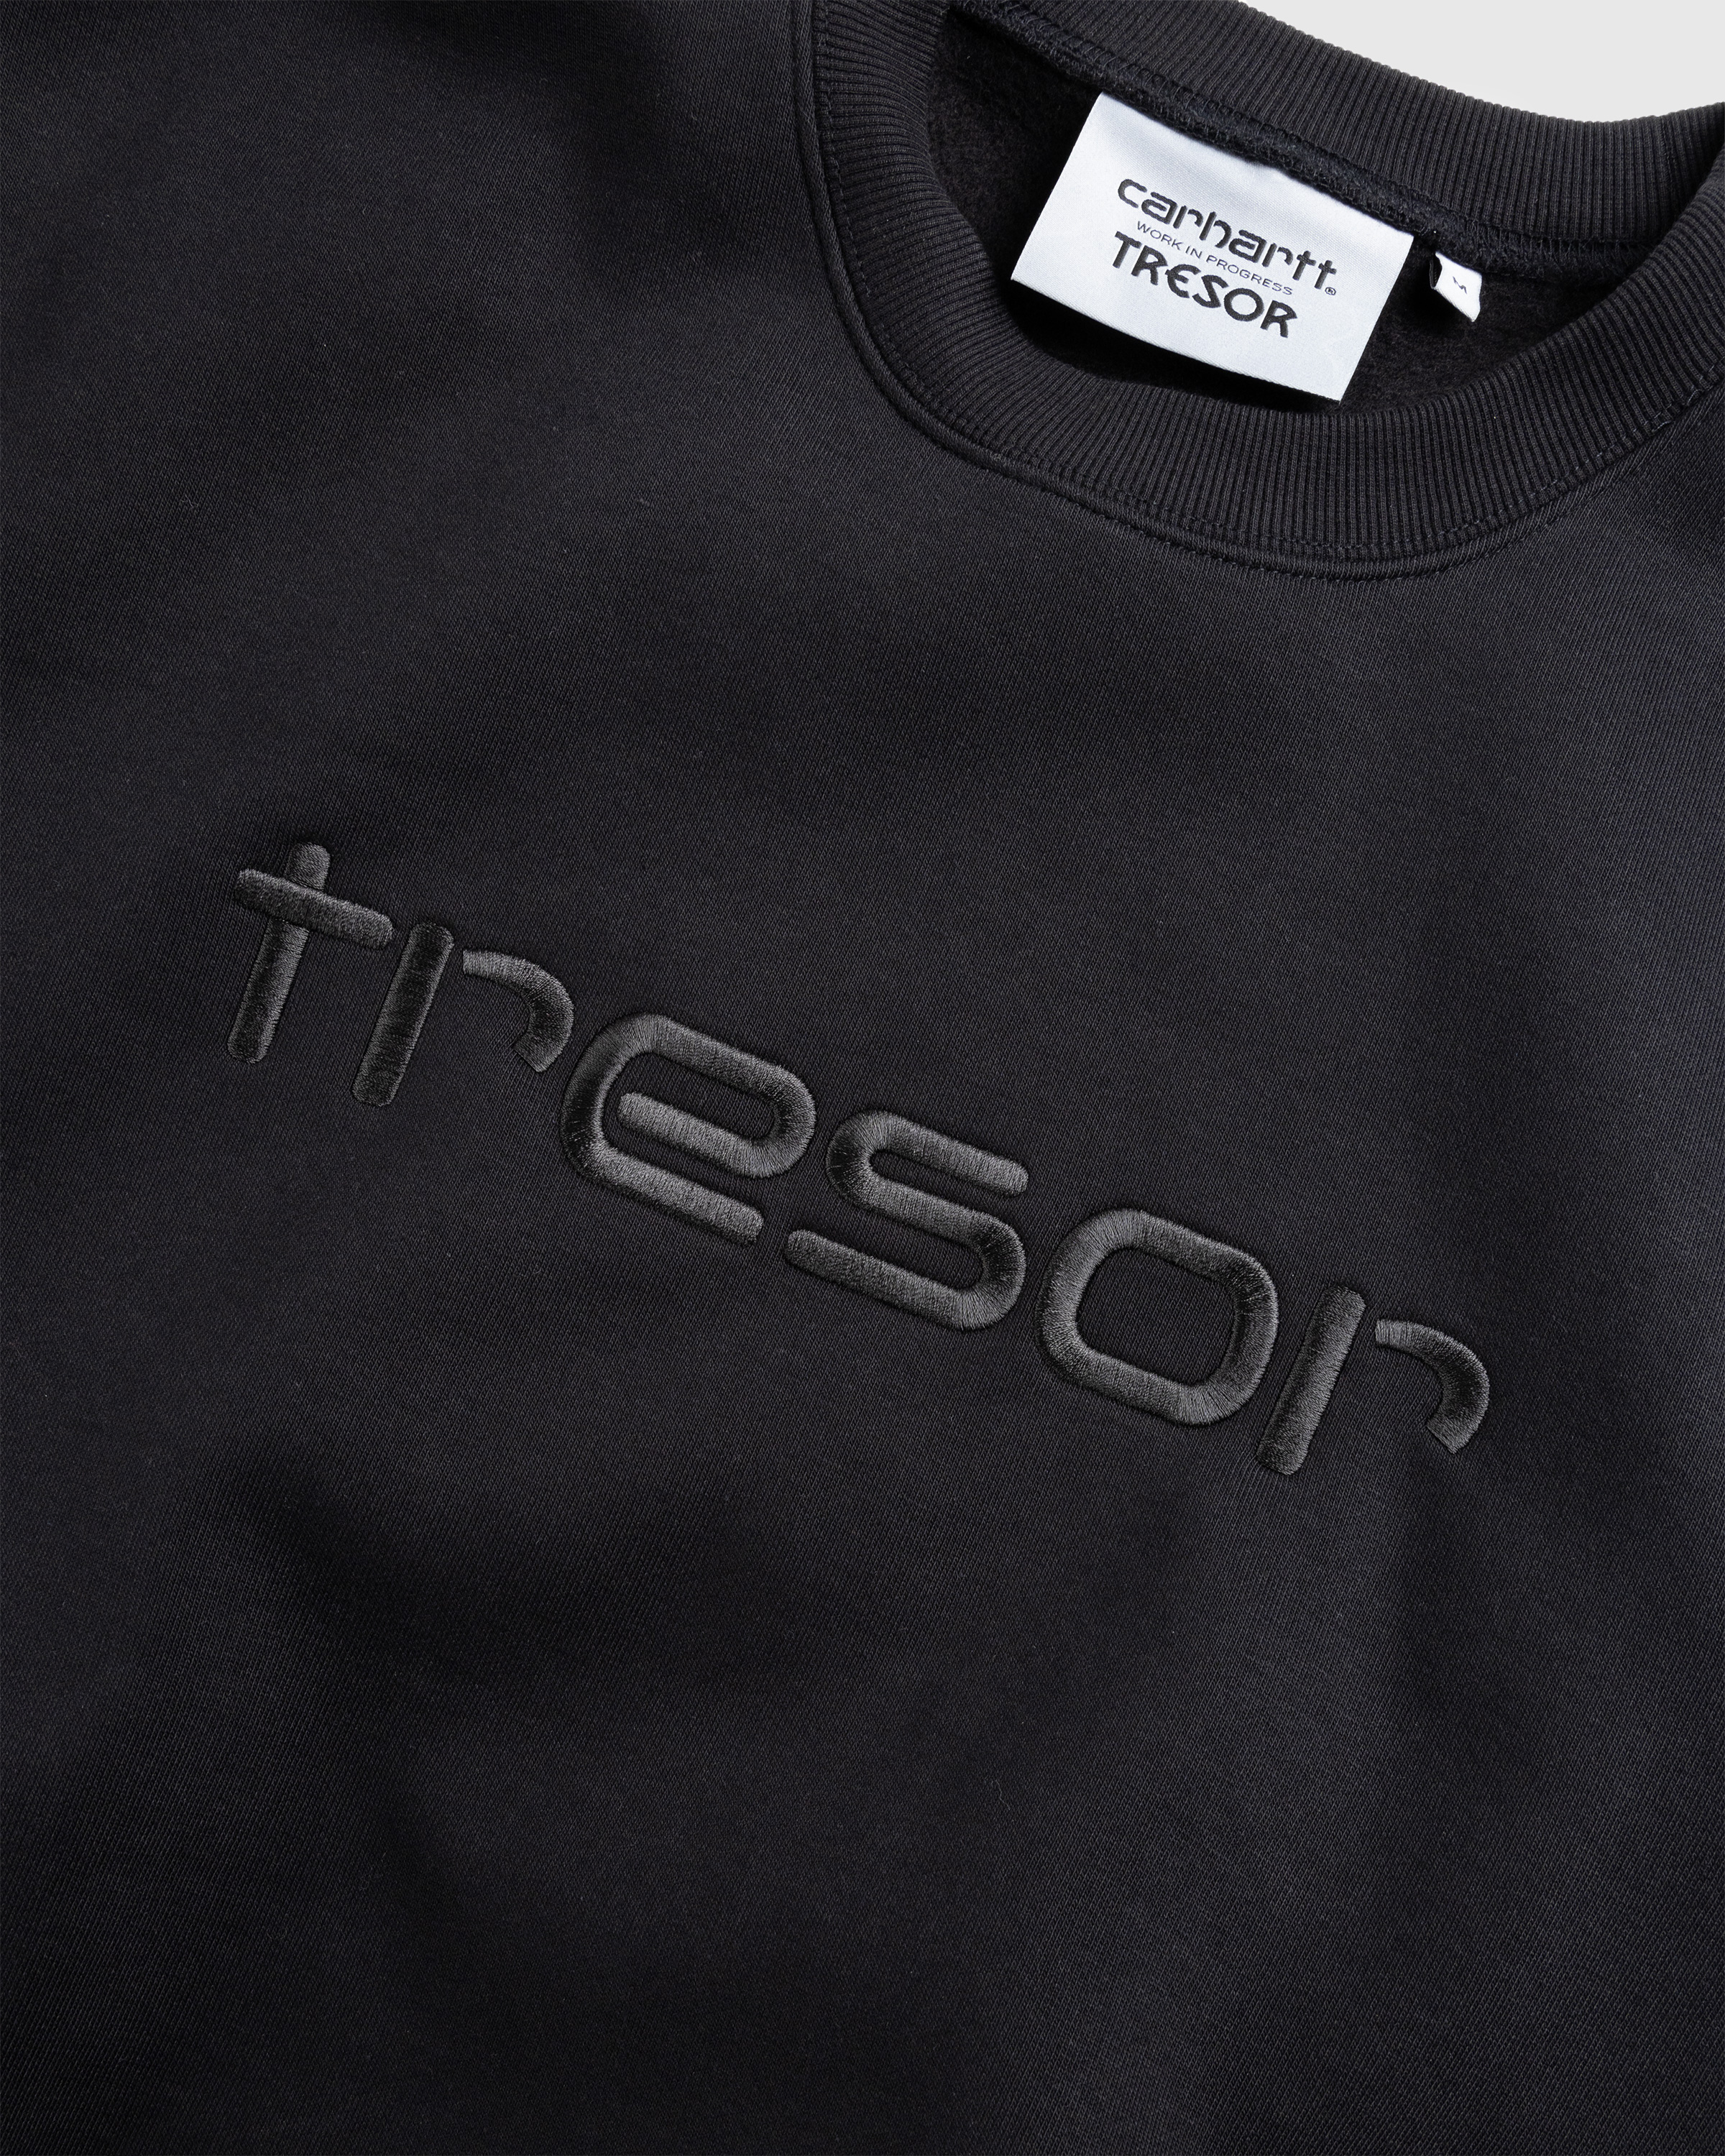 Carhartt WIP x Tresor – Techno Alliance Sweatshirt Black/Grey - Knitwear - Black - Image 6